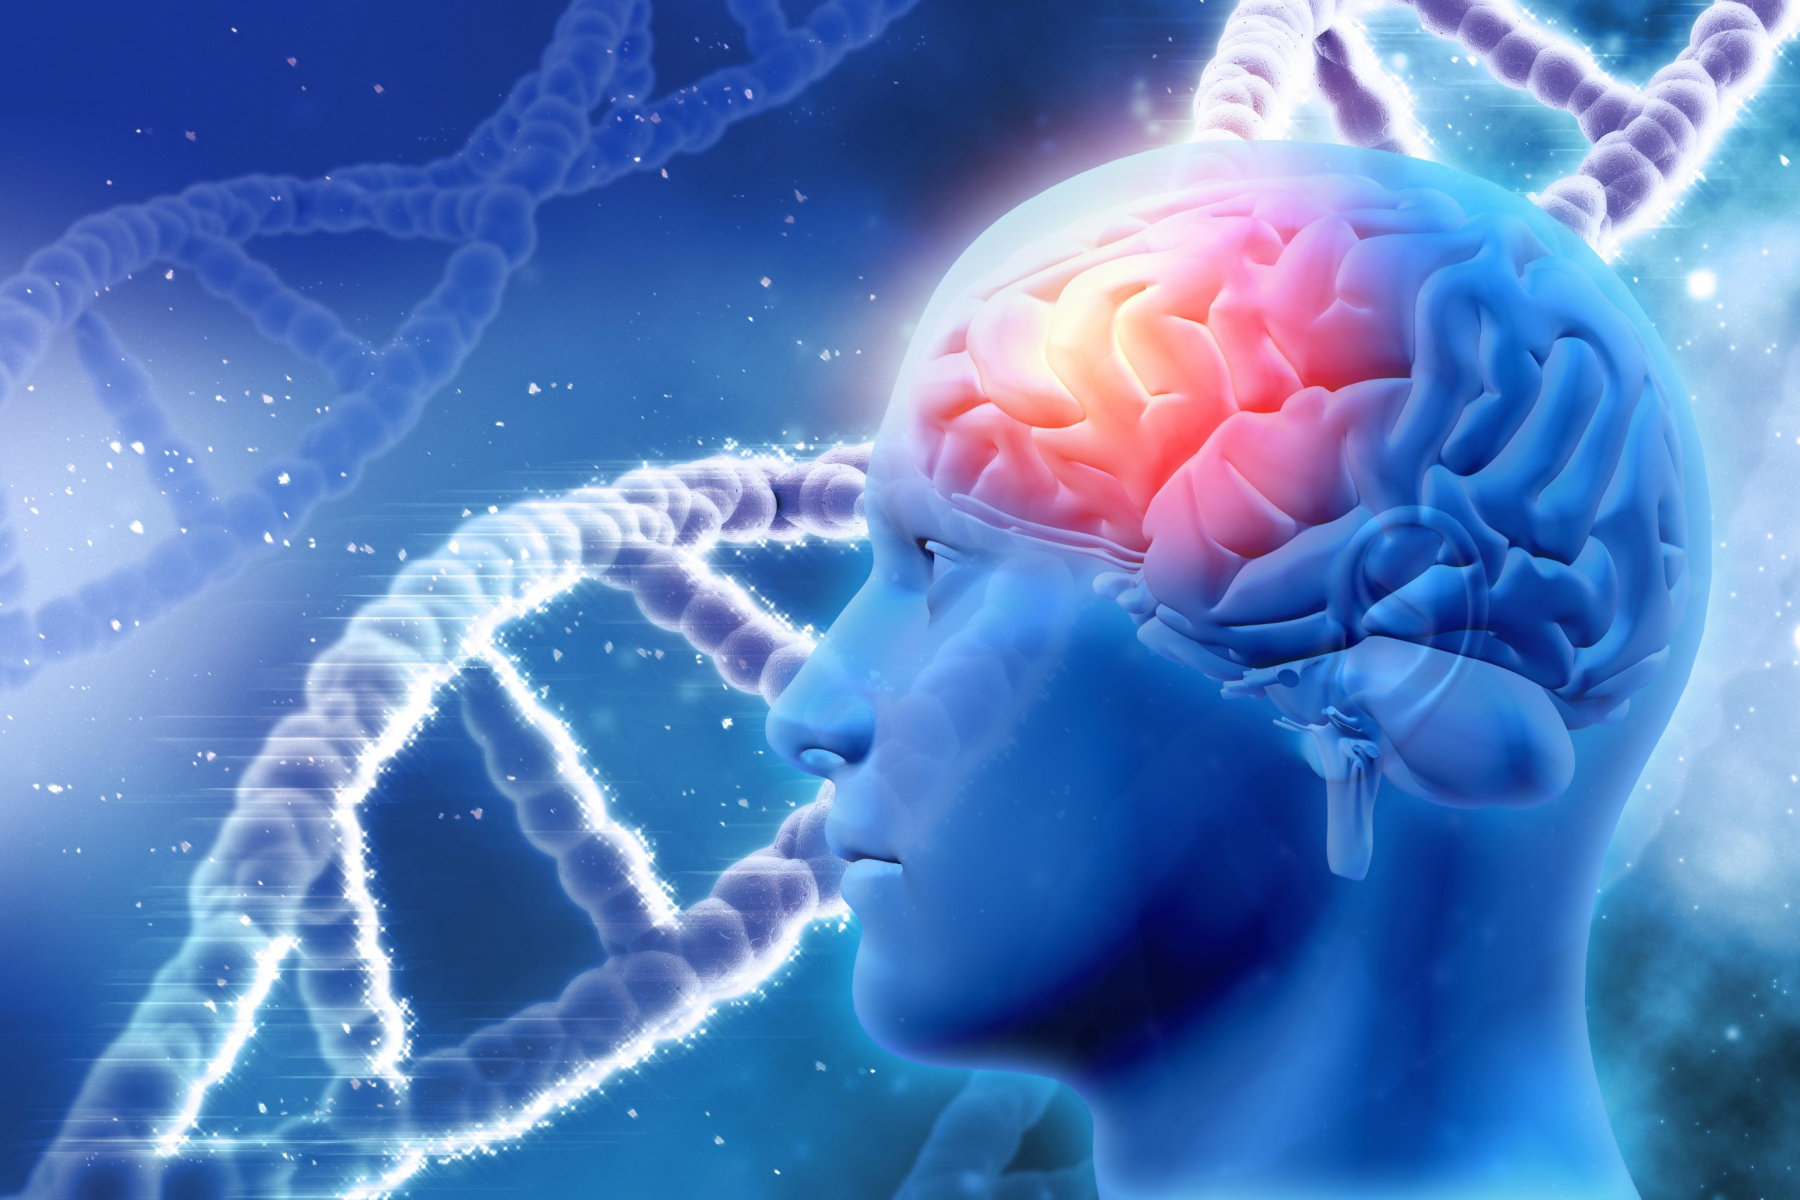 Eγκεφαλίτιδα: Ποια συμπτώματα σχετίζονται με τη φλεγμονή του εγκεφάλου;